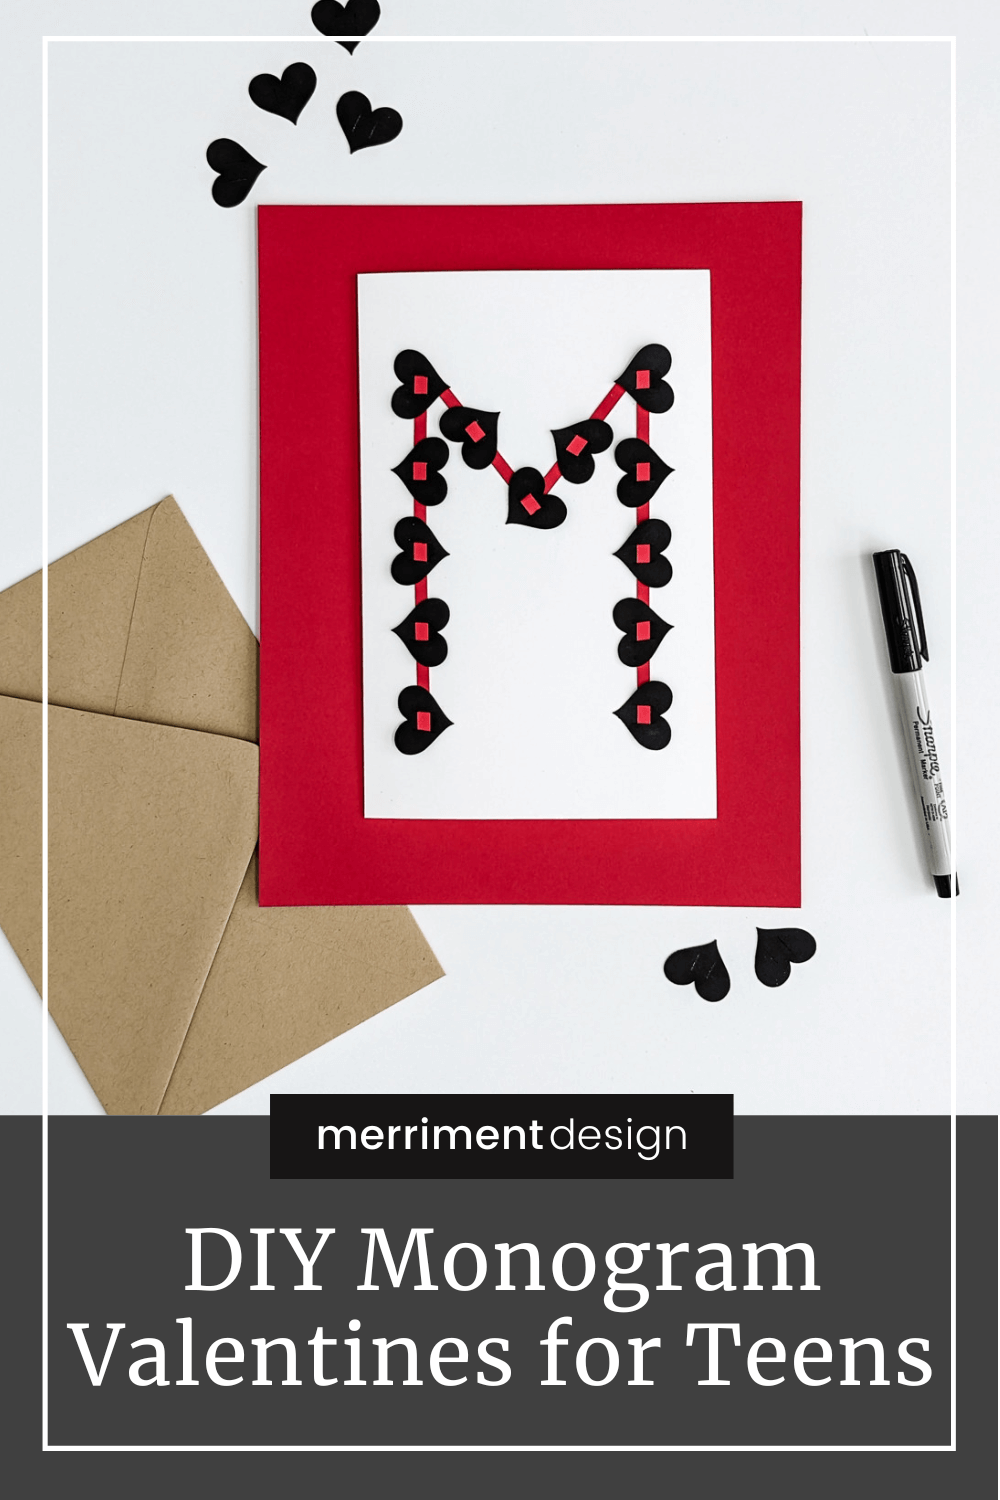 DIY monogram valentine for teens with black hearts